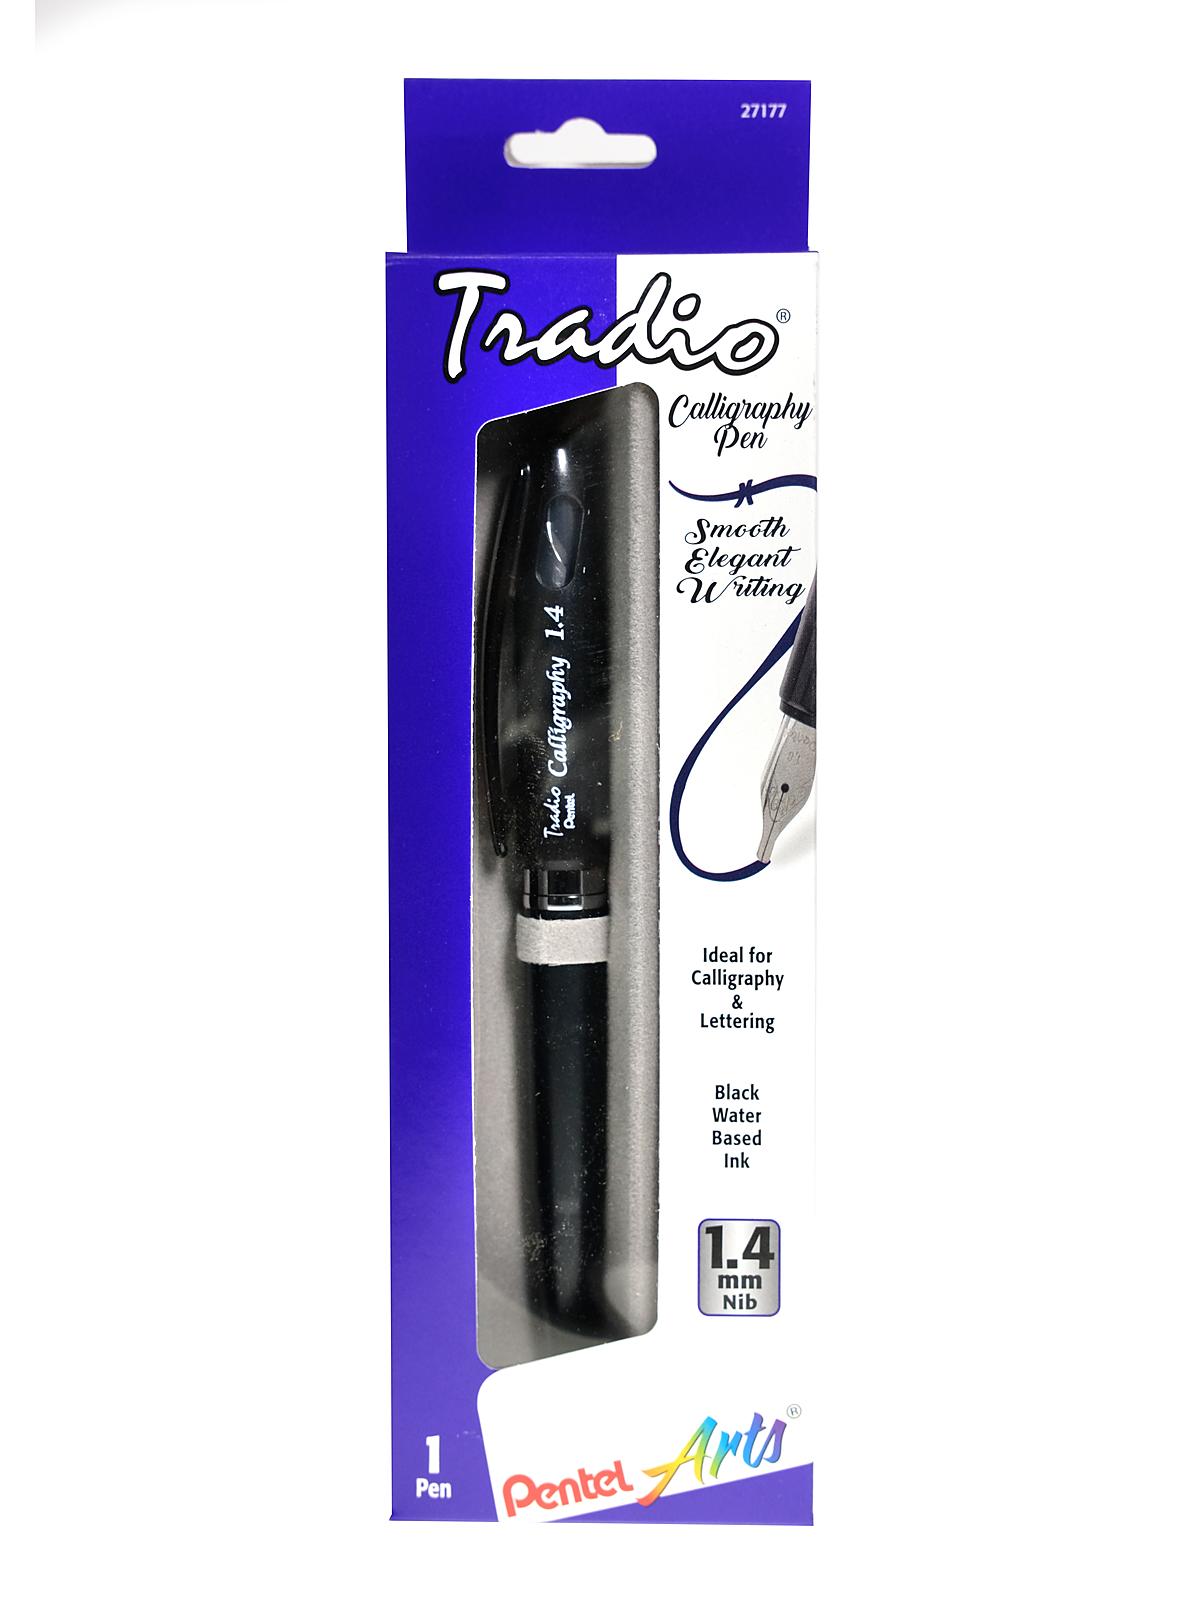 Pentel Tradio Calligraphy Pen Calligraphy Pen 1.4mm